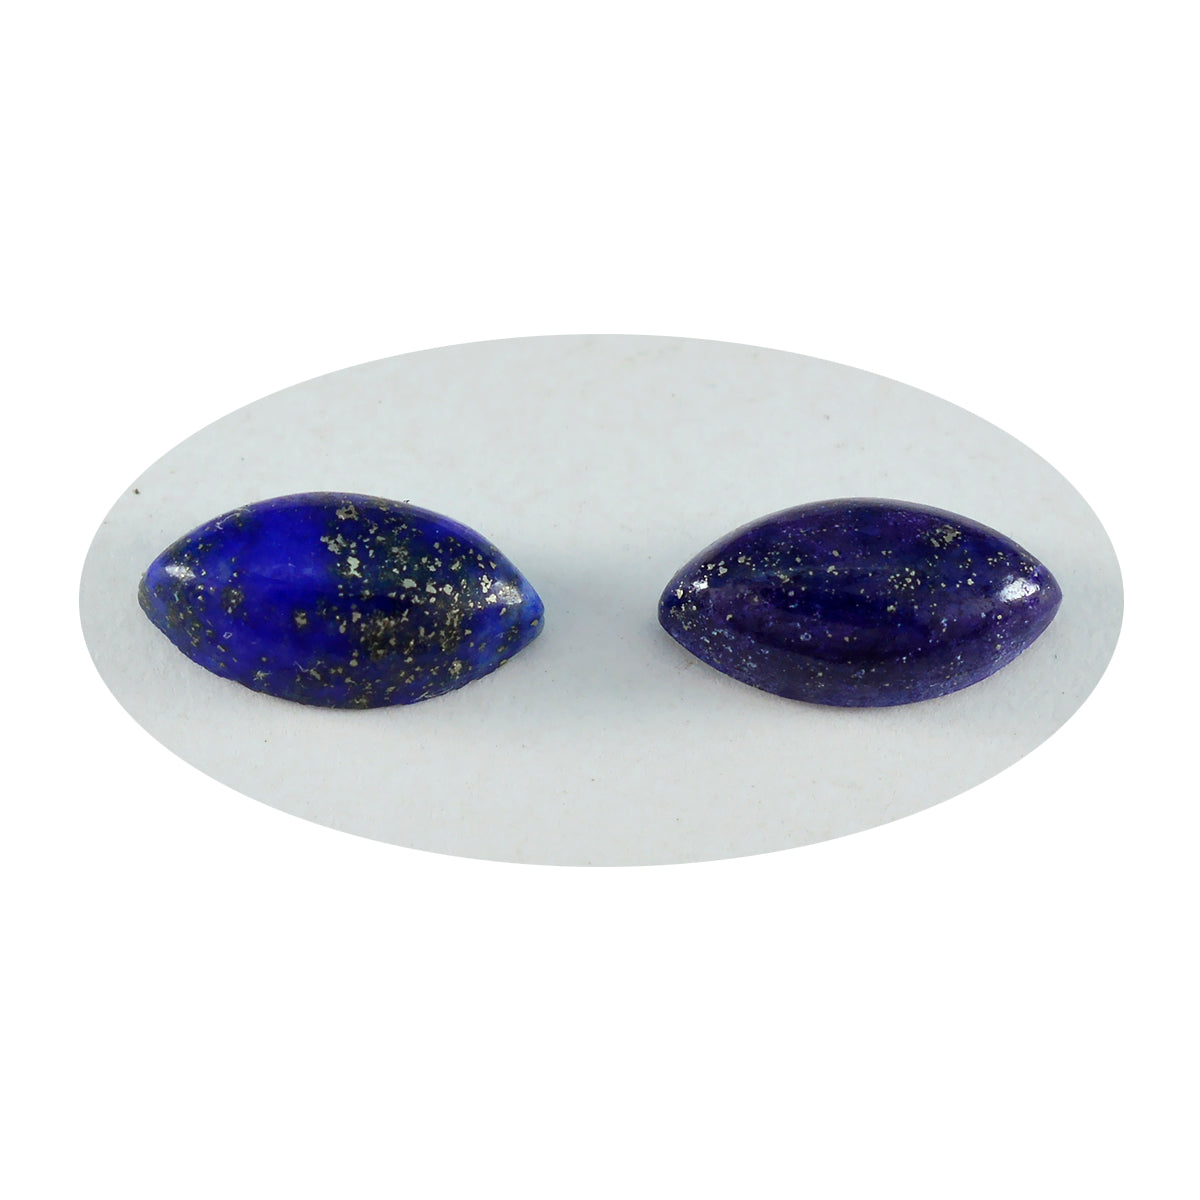 Riyogems 1PC Blue Lapis Lazuli Cabochon 10x20 mm Marquise Shape great Quality Loose Stone